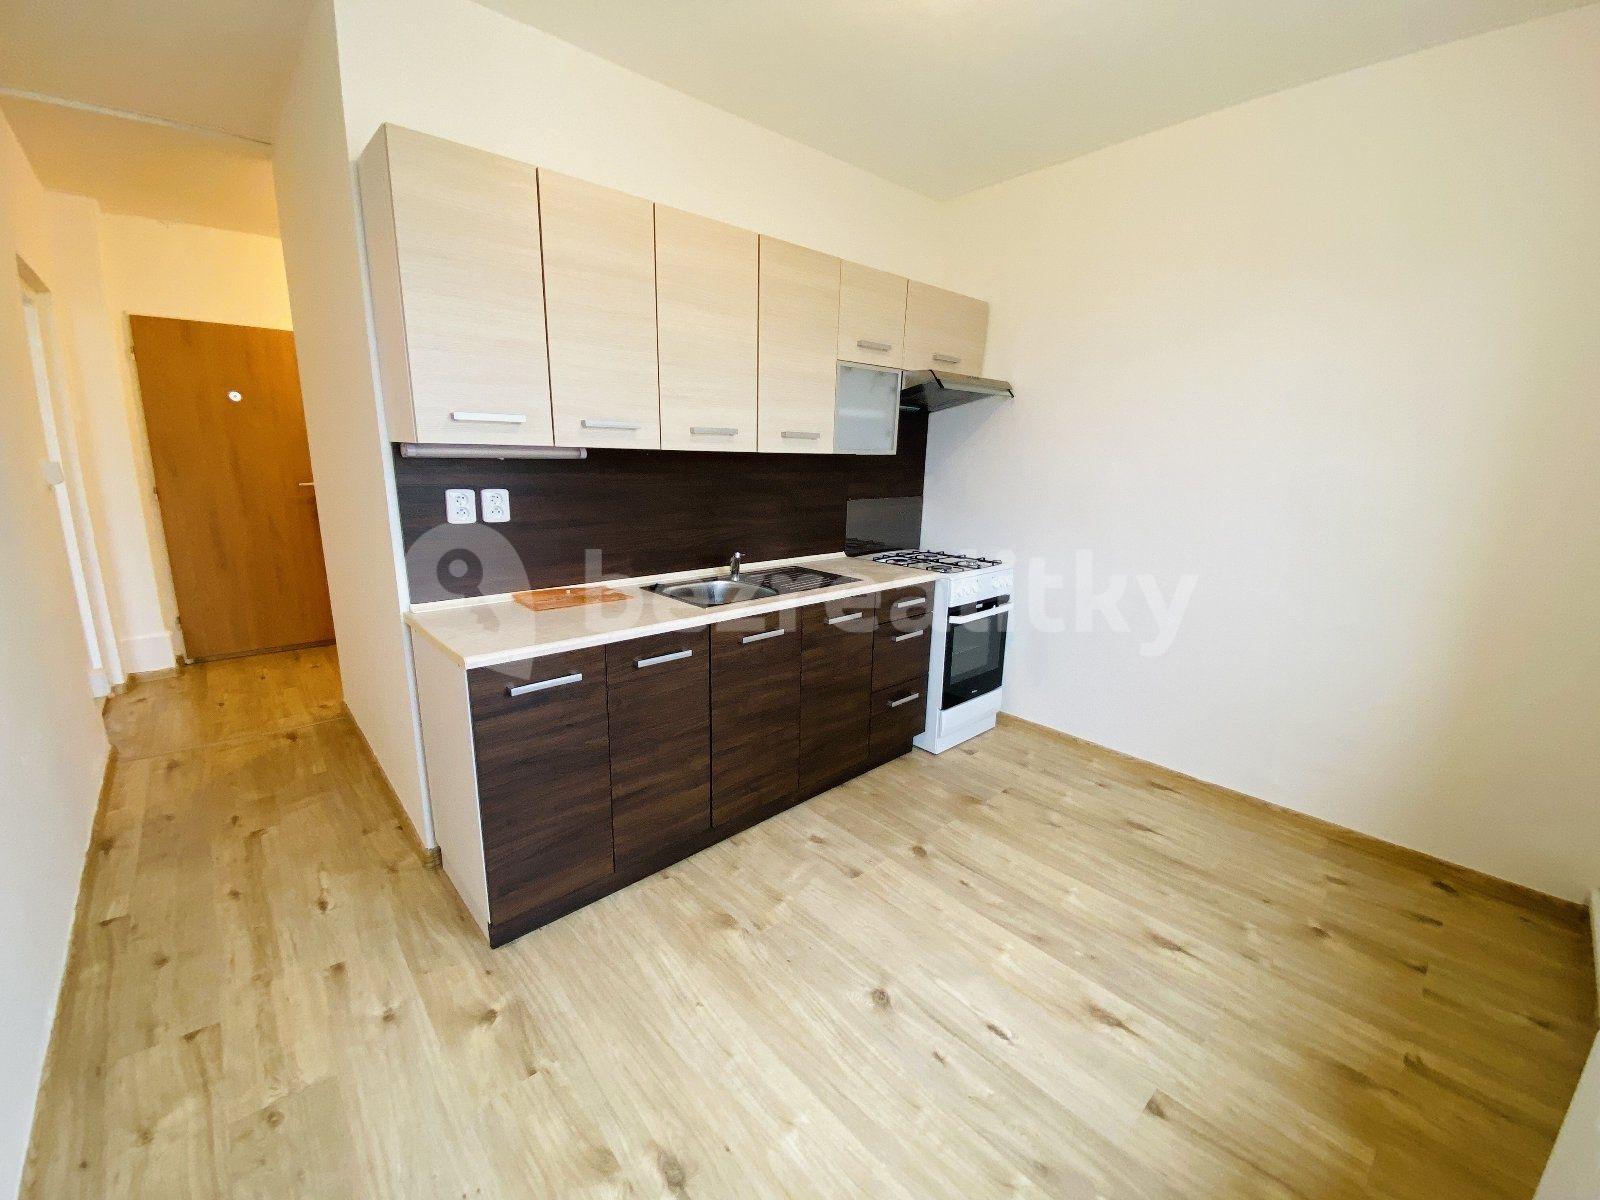 2 bedroom flat to rent, 55 m², Tylova, Ostrava, Moravskoslezský Region